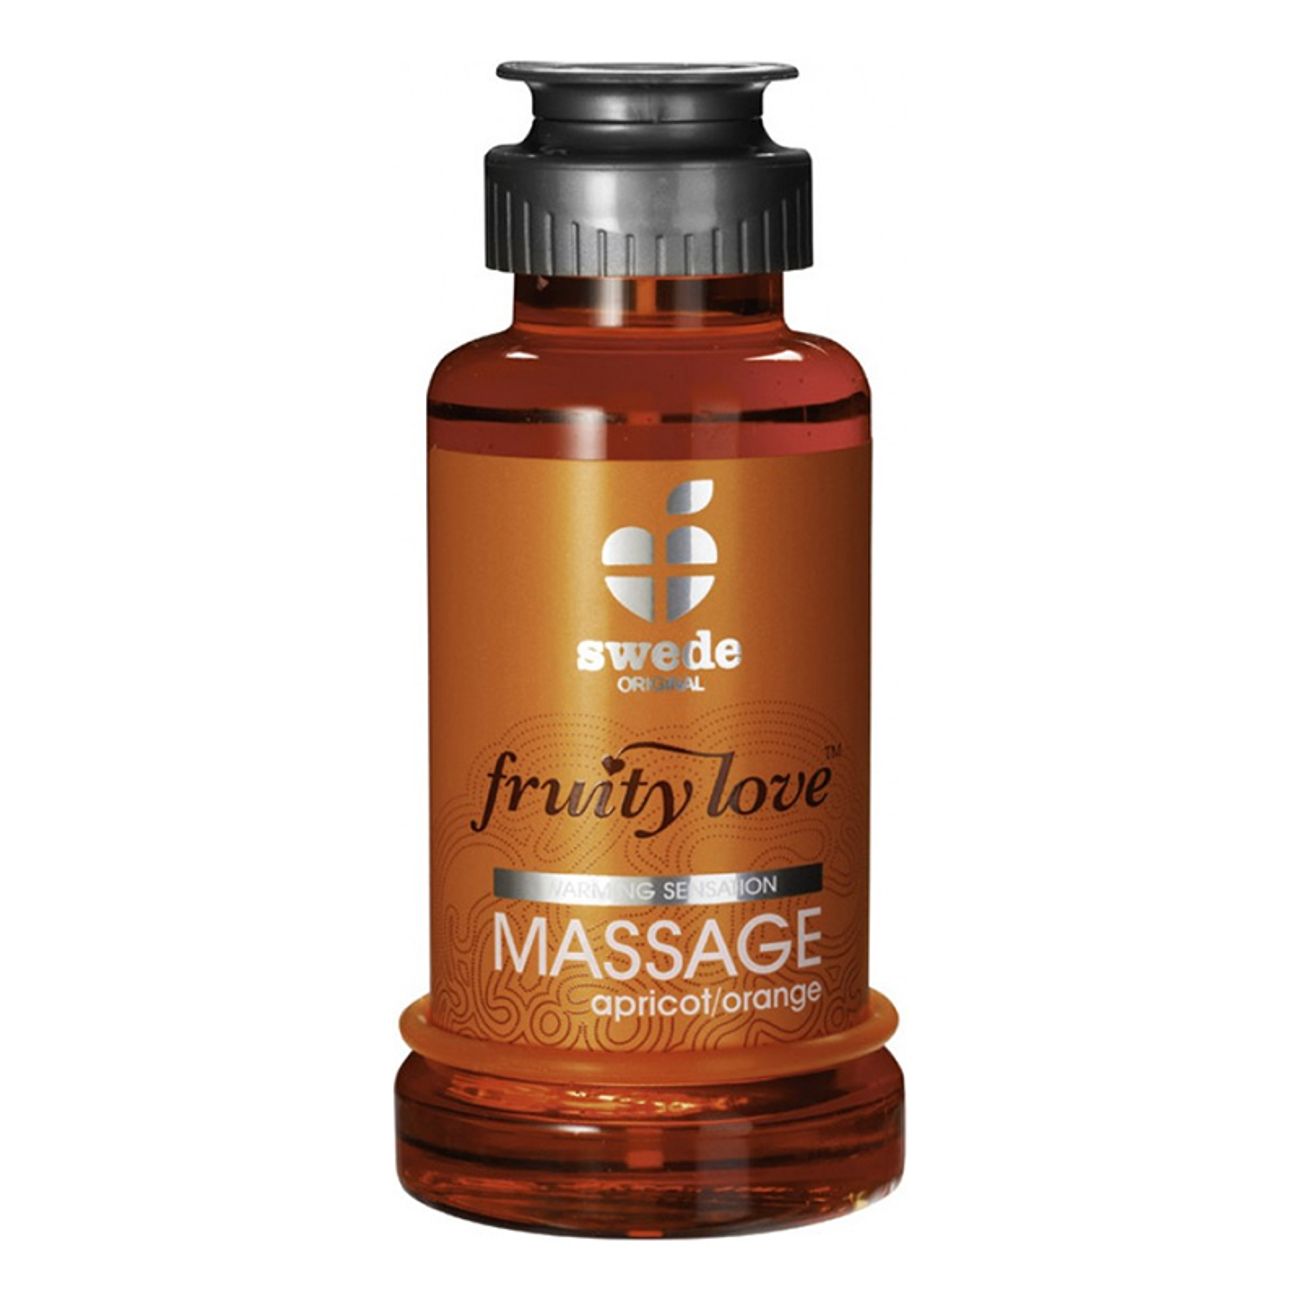 fruity-love-massage-aprikosapelsin-1